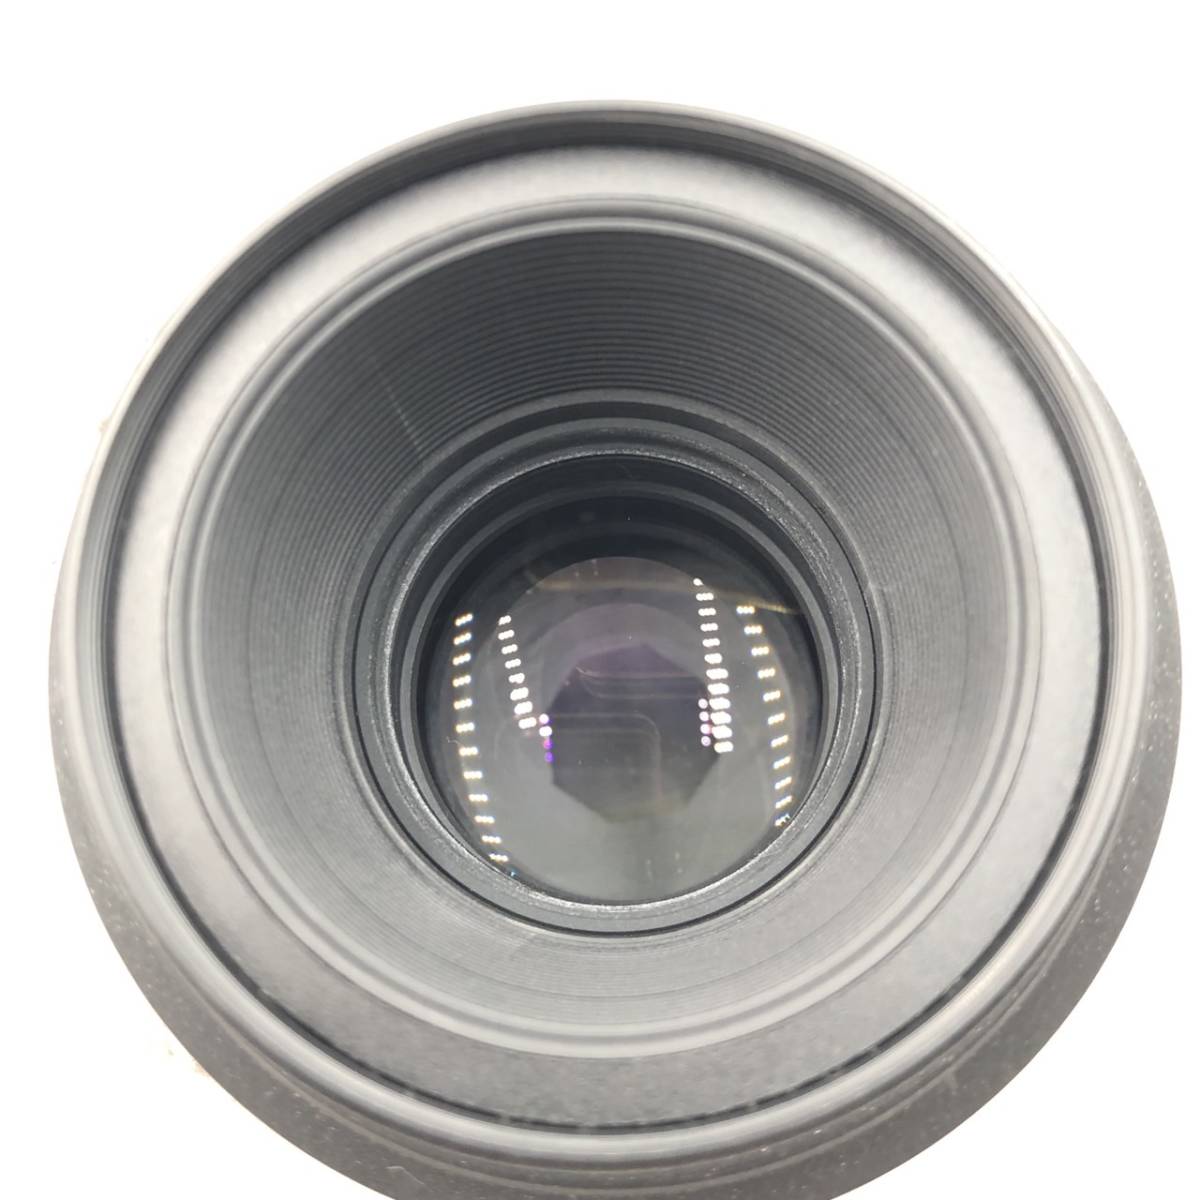 SIGMA Sigma EX 105mm 1:2.8 MACRO Canon camera lens 